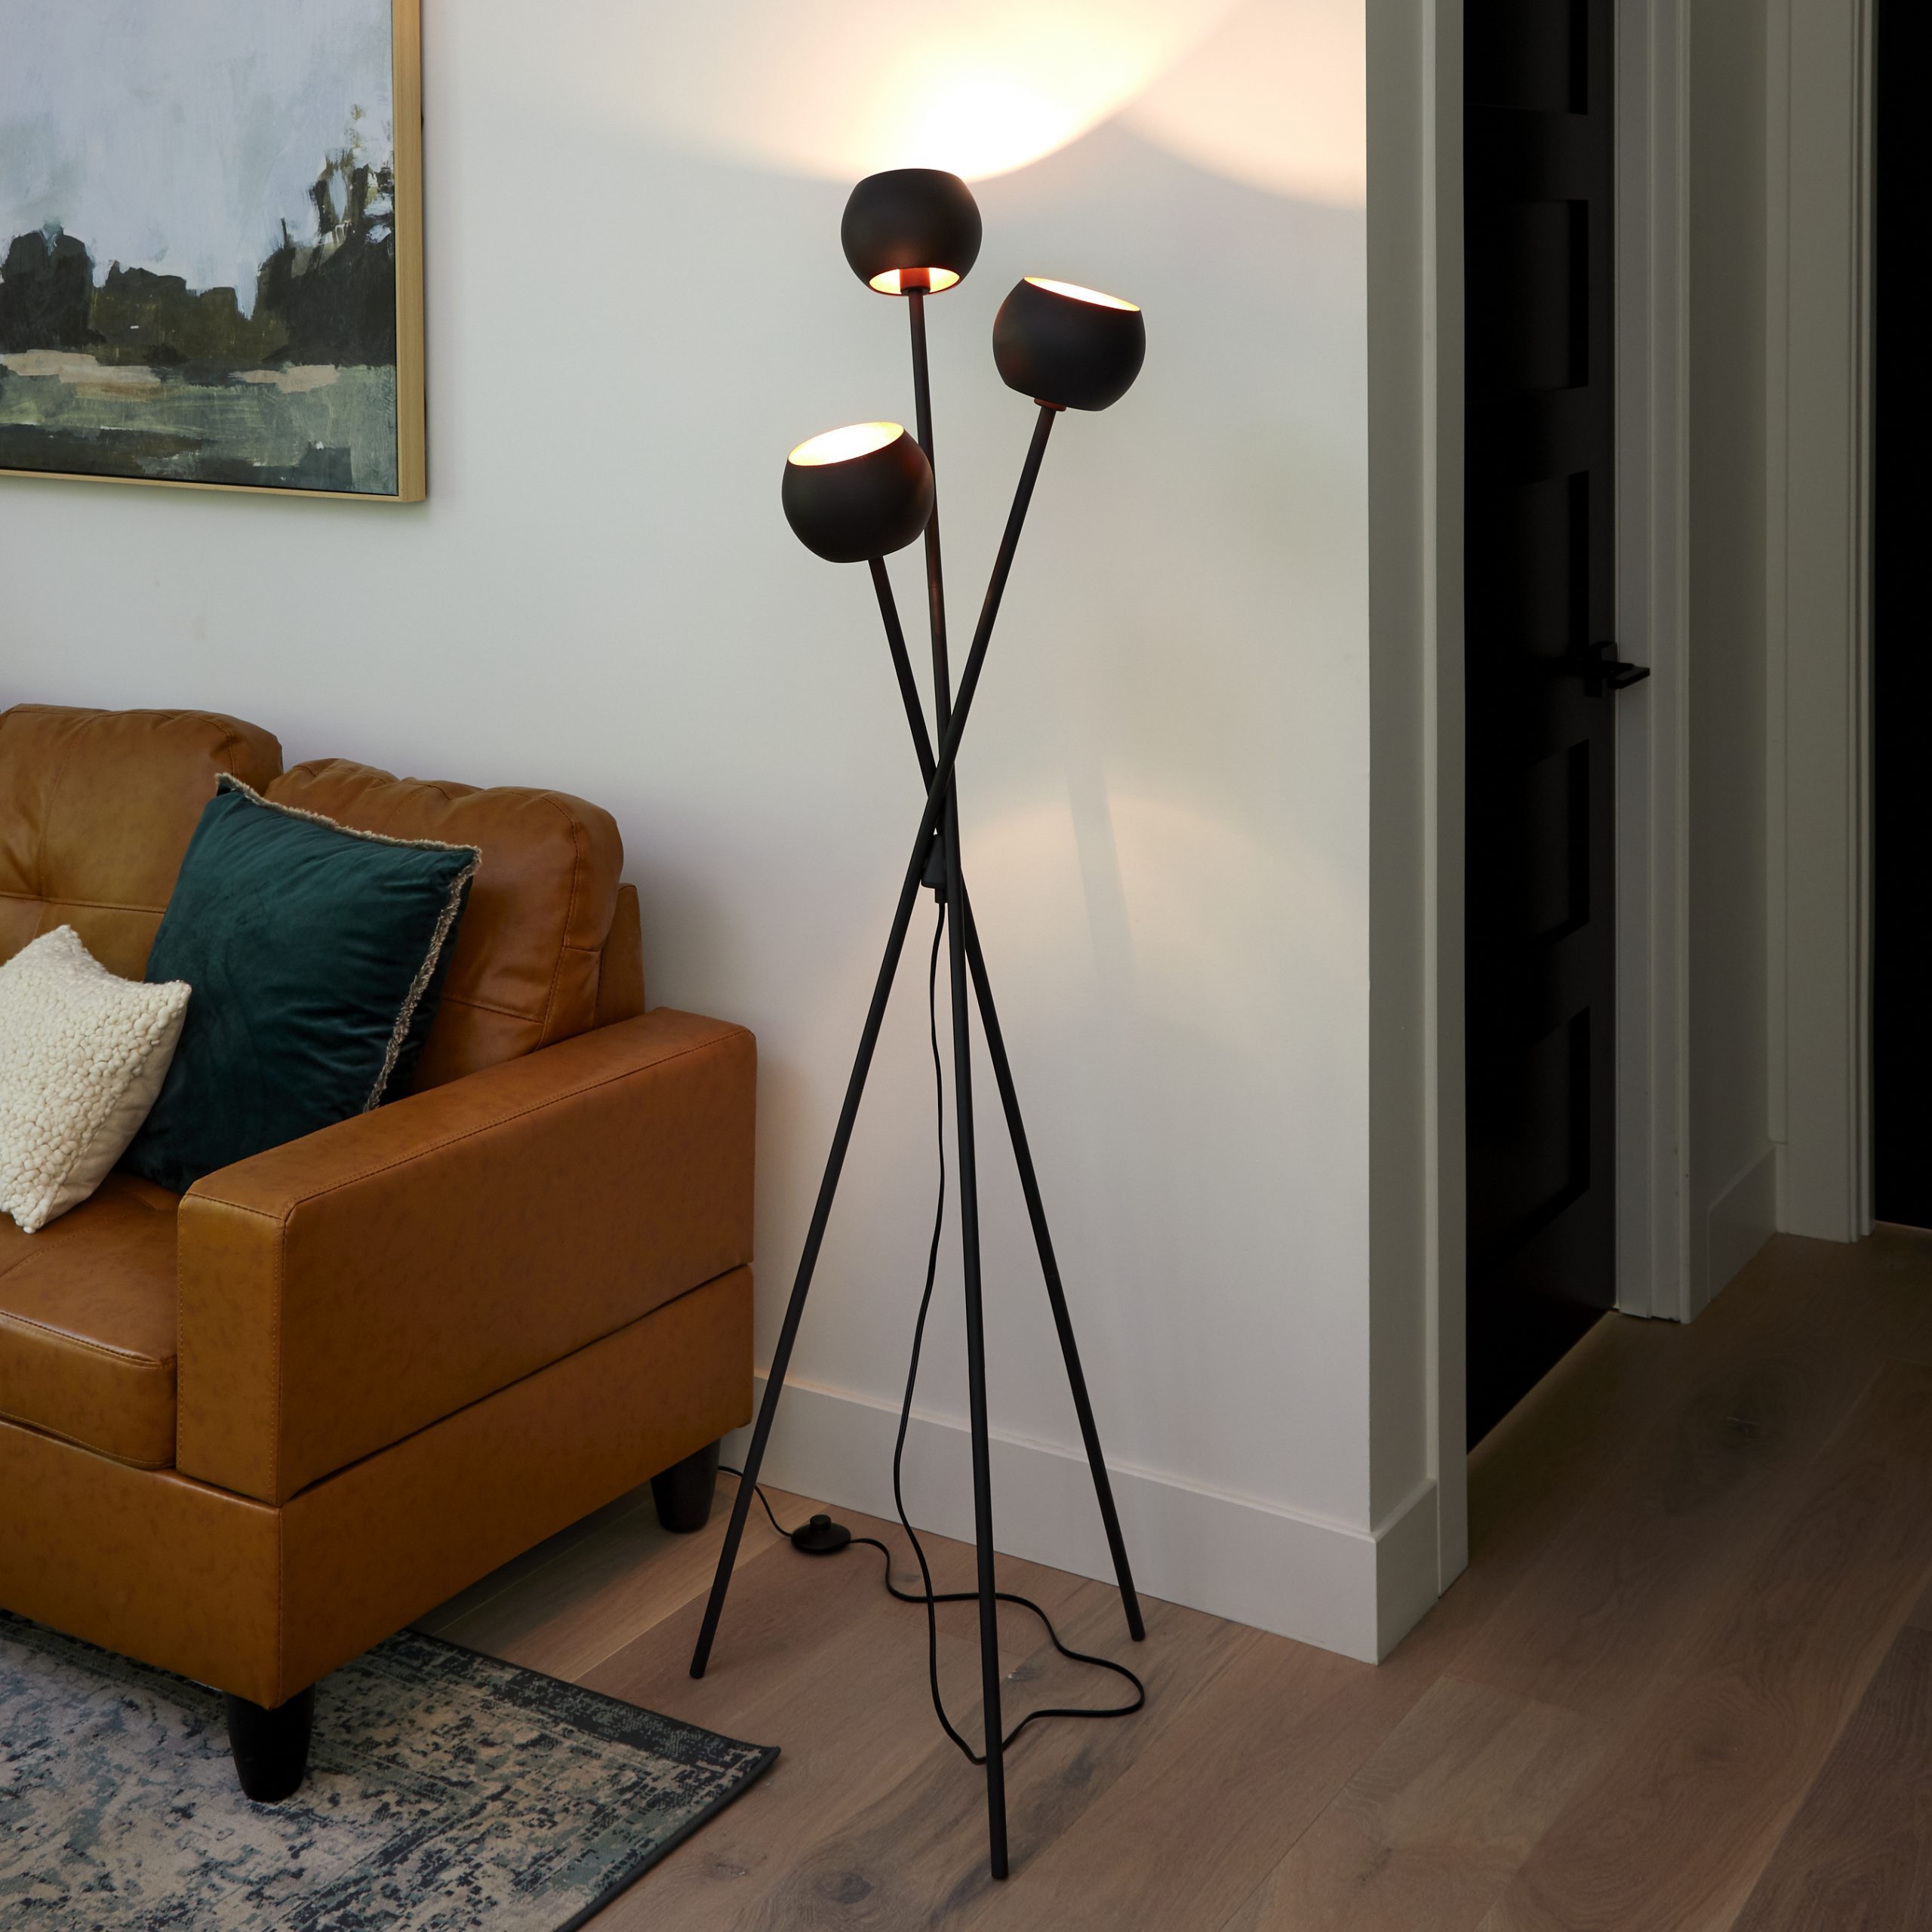 Living Room Lighting Ideas We Love | Family Handyman